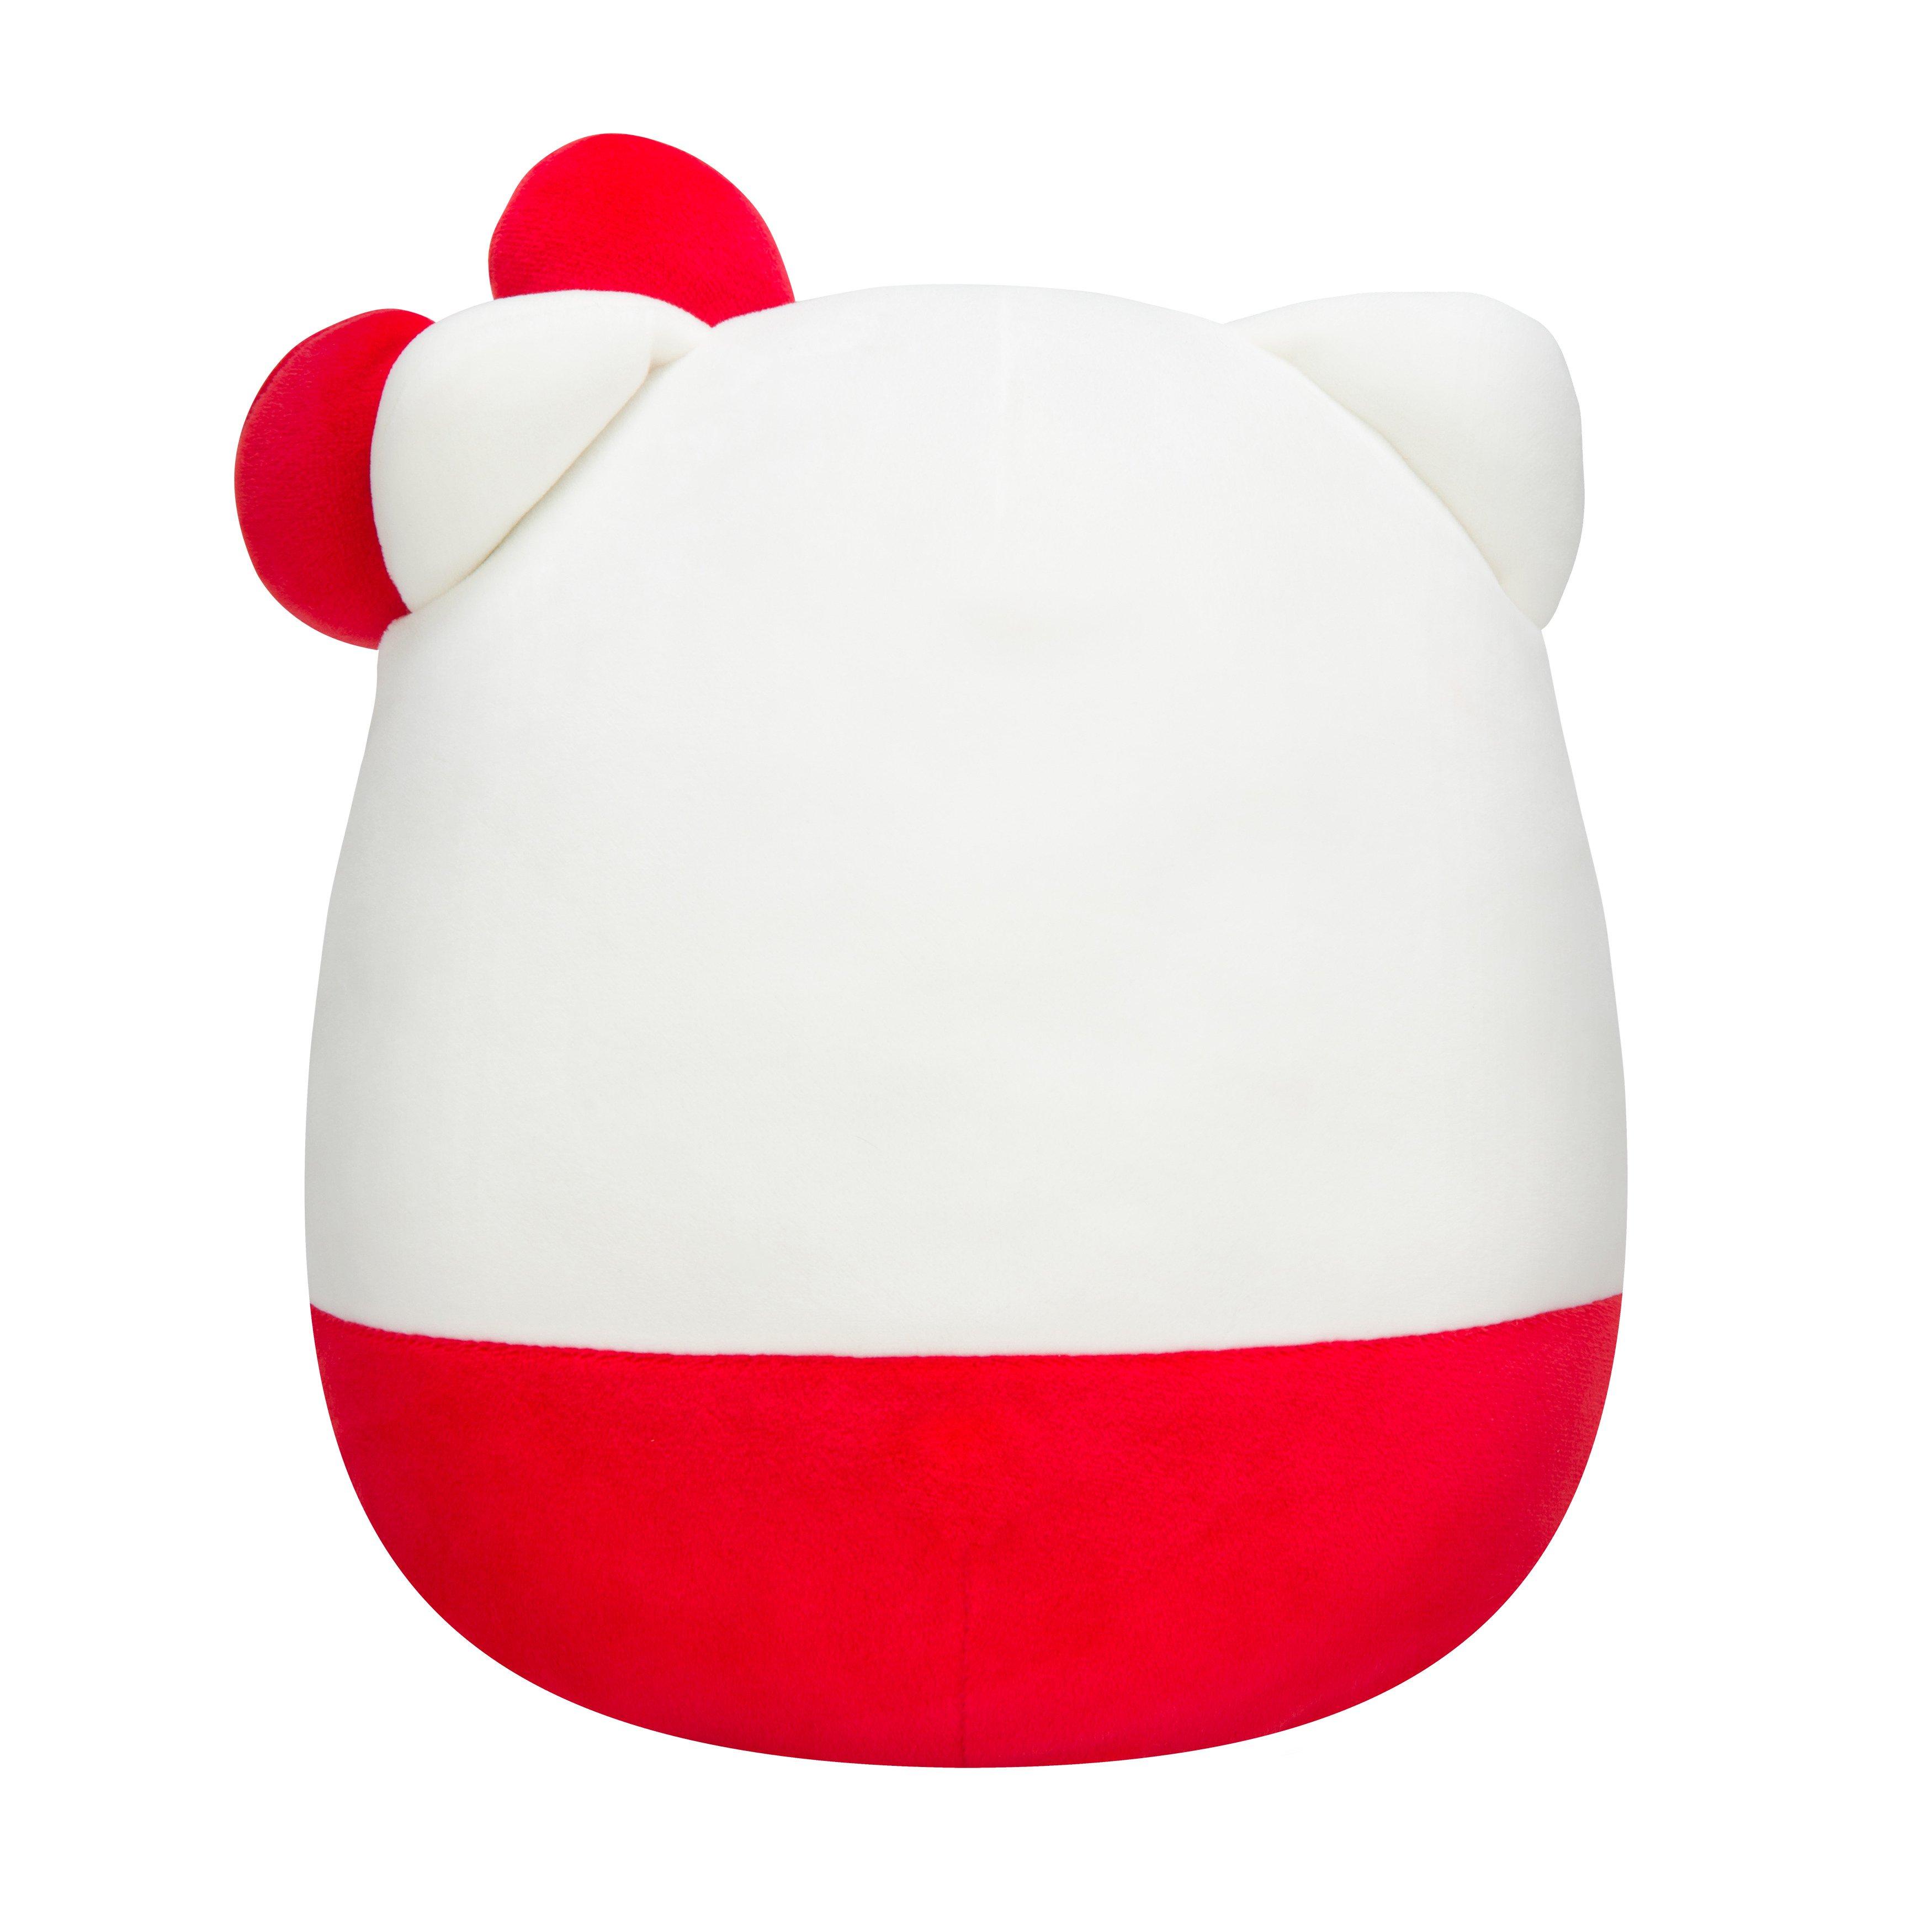 Squishmallows Sanrio Hello Kitty 8-in Plush